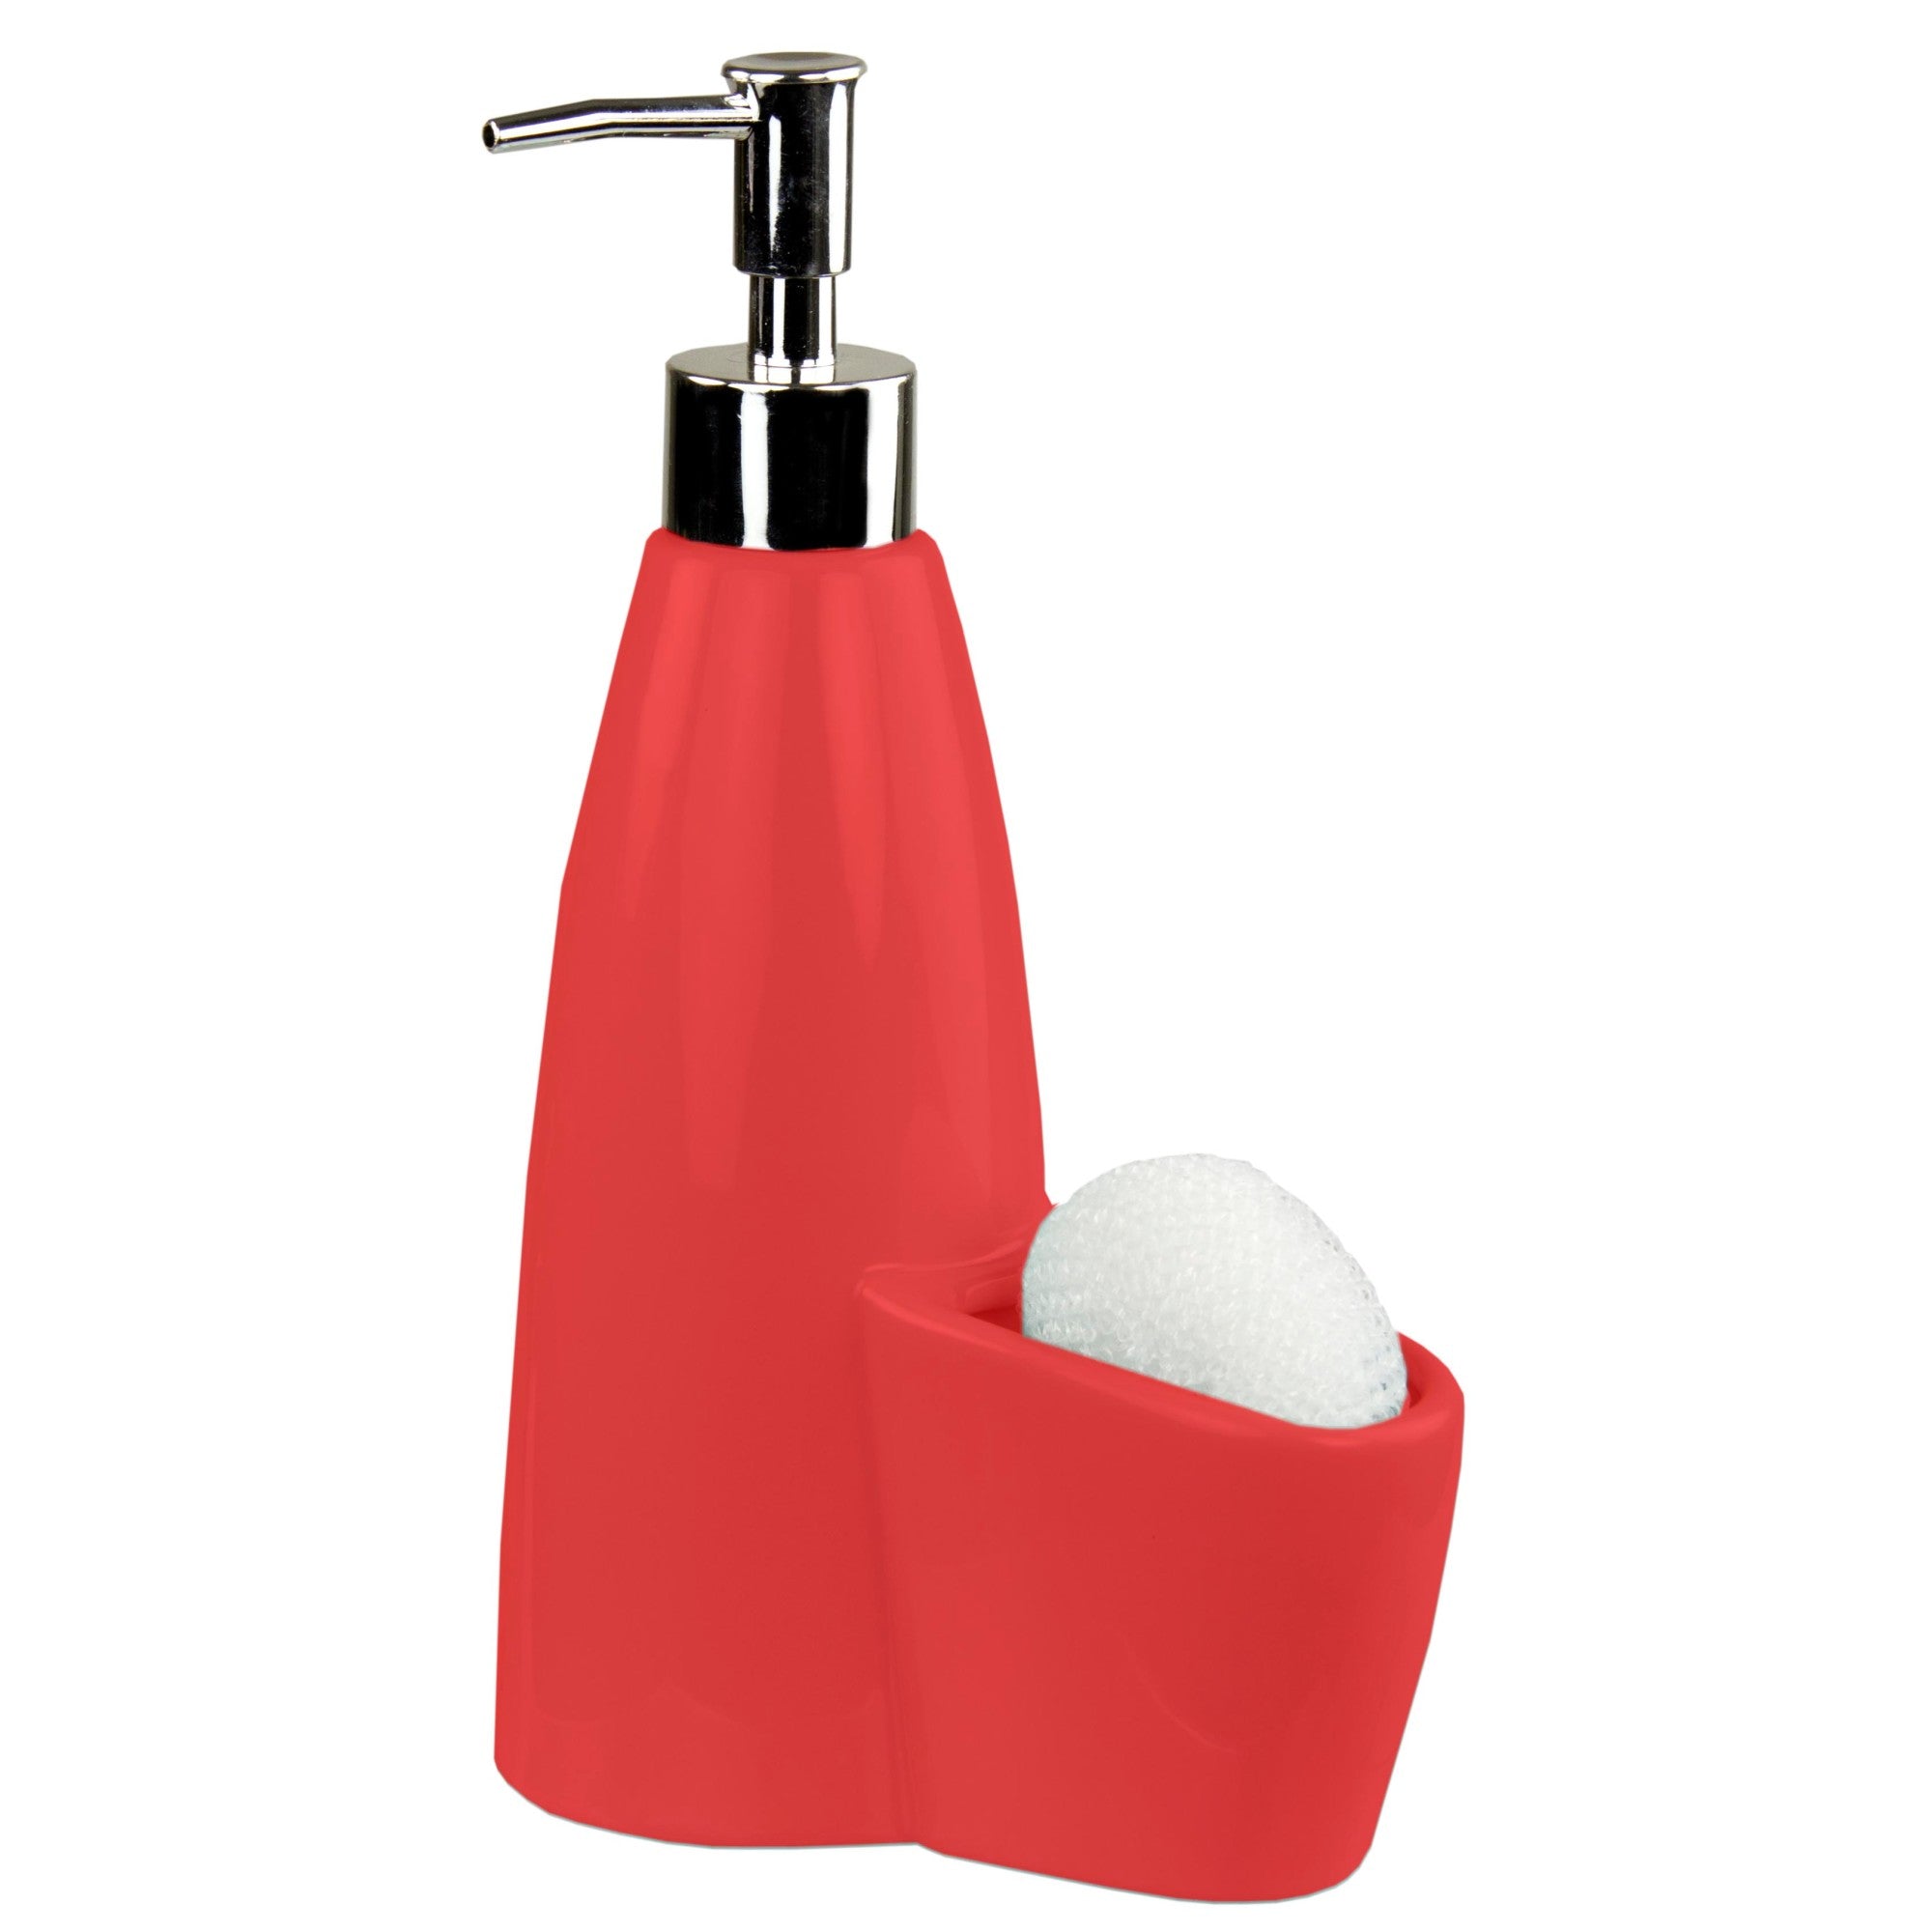 Home Basics Tall Ceramic Soap Dispenser with Sponge - Assorted Colors